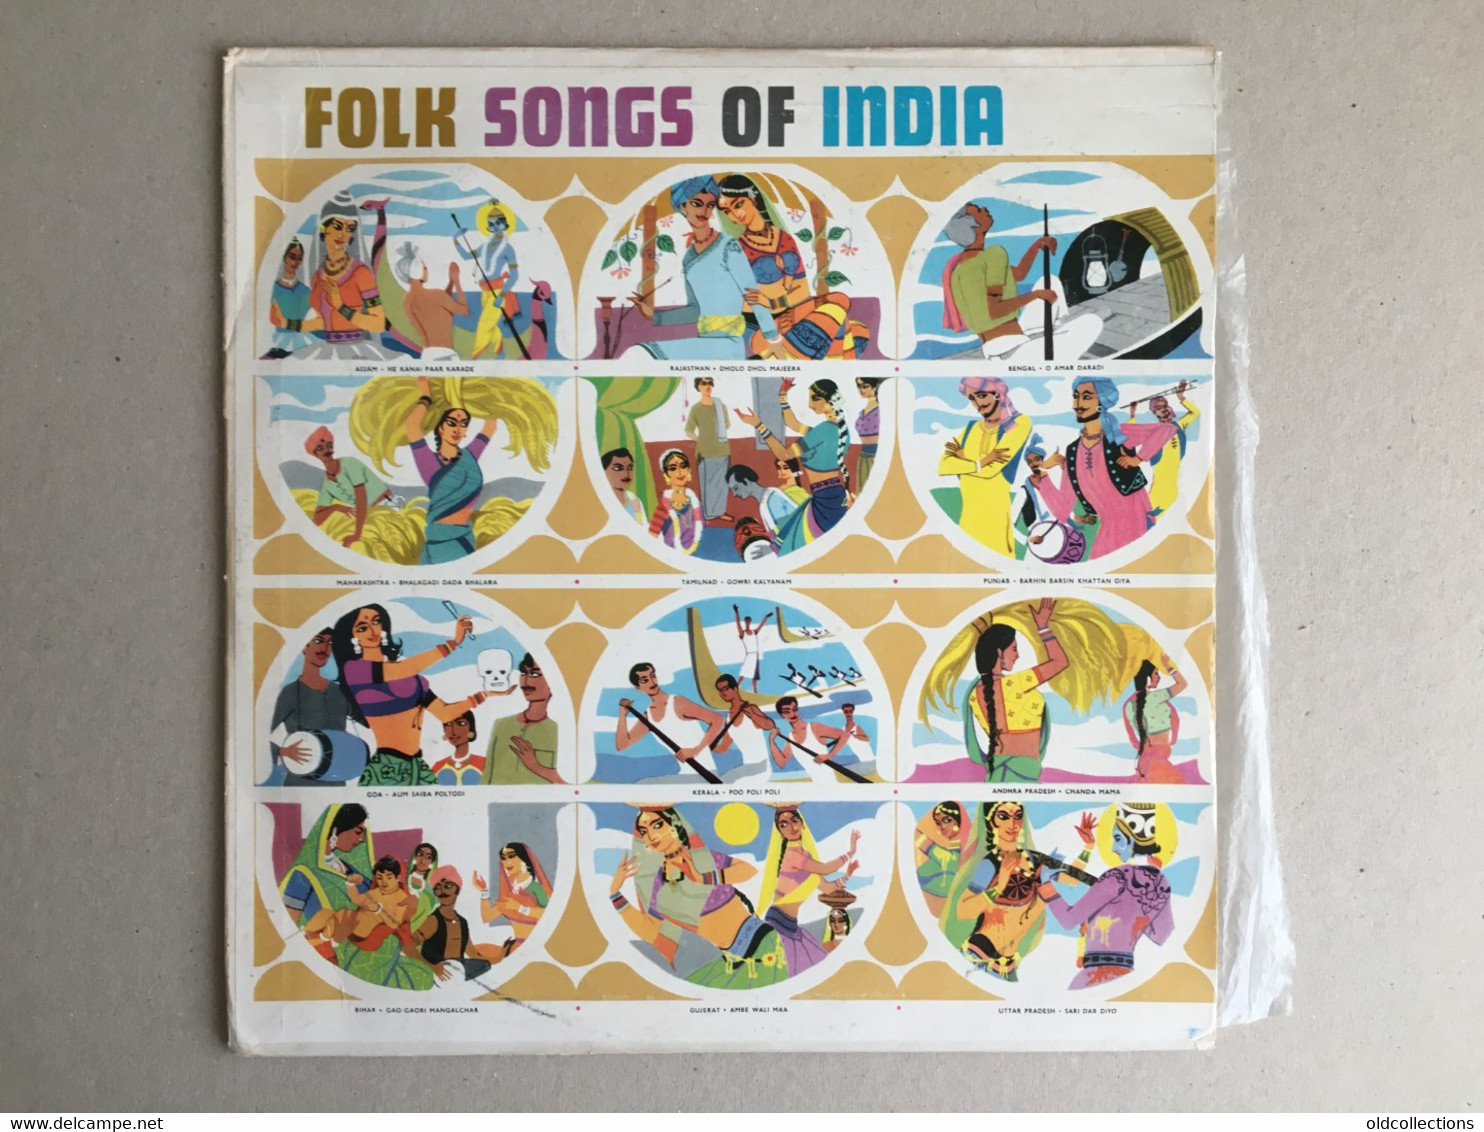 Schallplatte Vinyl Record Disque Vinyle LP Record - India Inde Indien Folk Songs Folklore Dum Dum Long Play Record - World Music